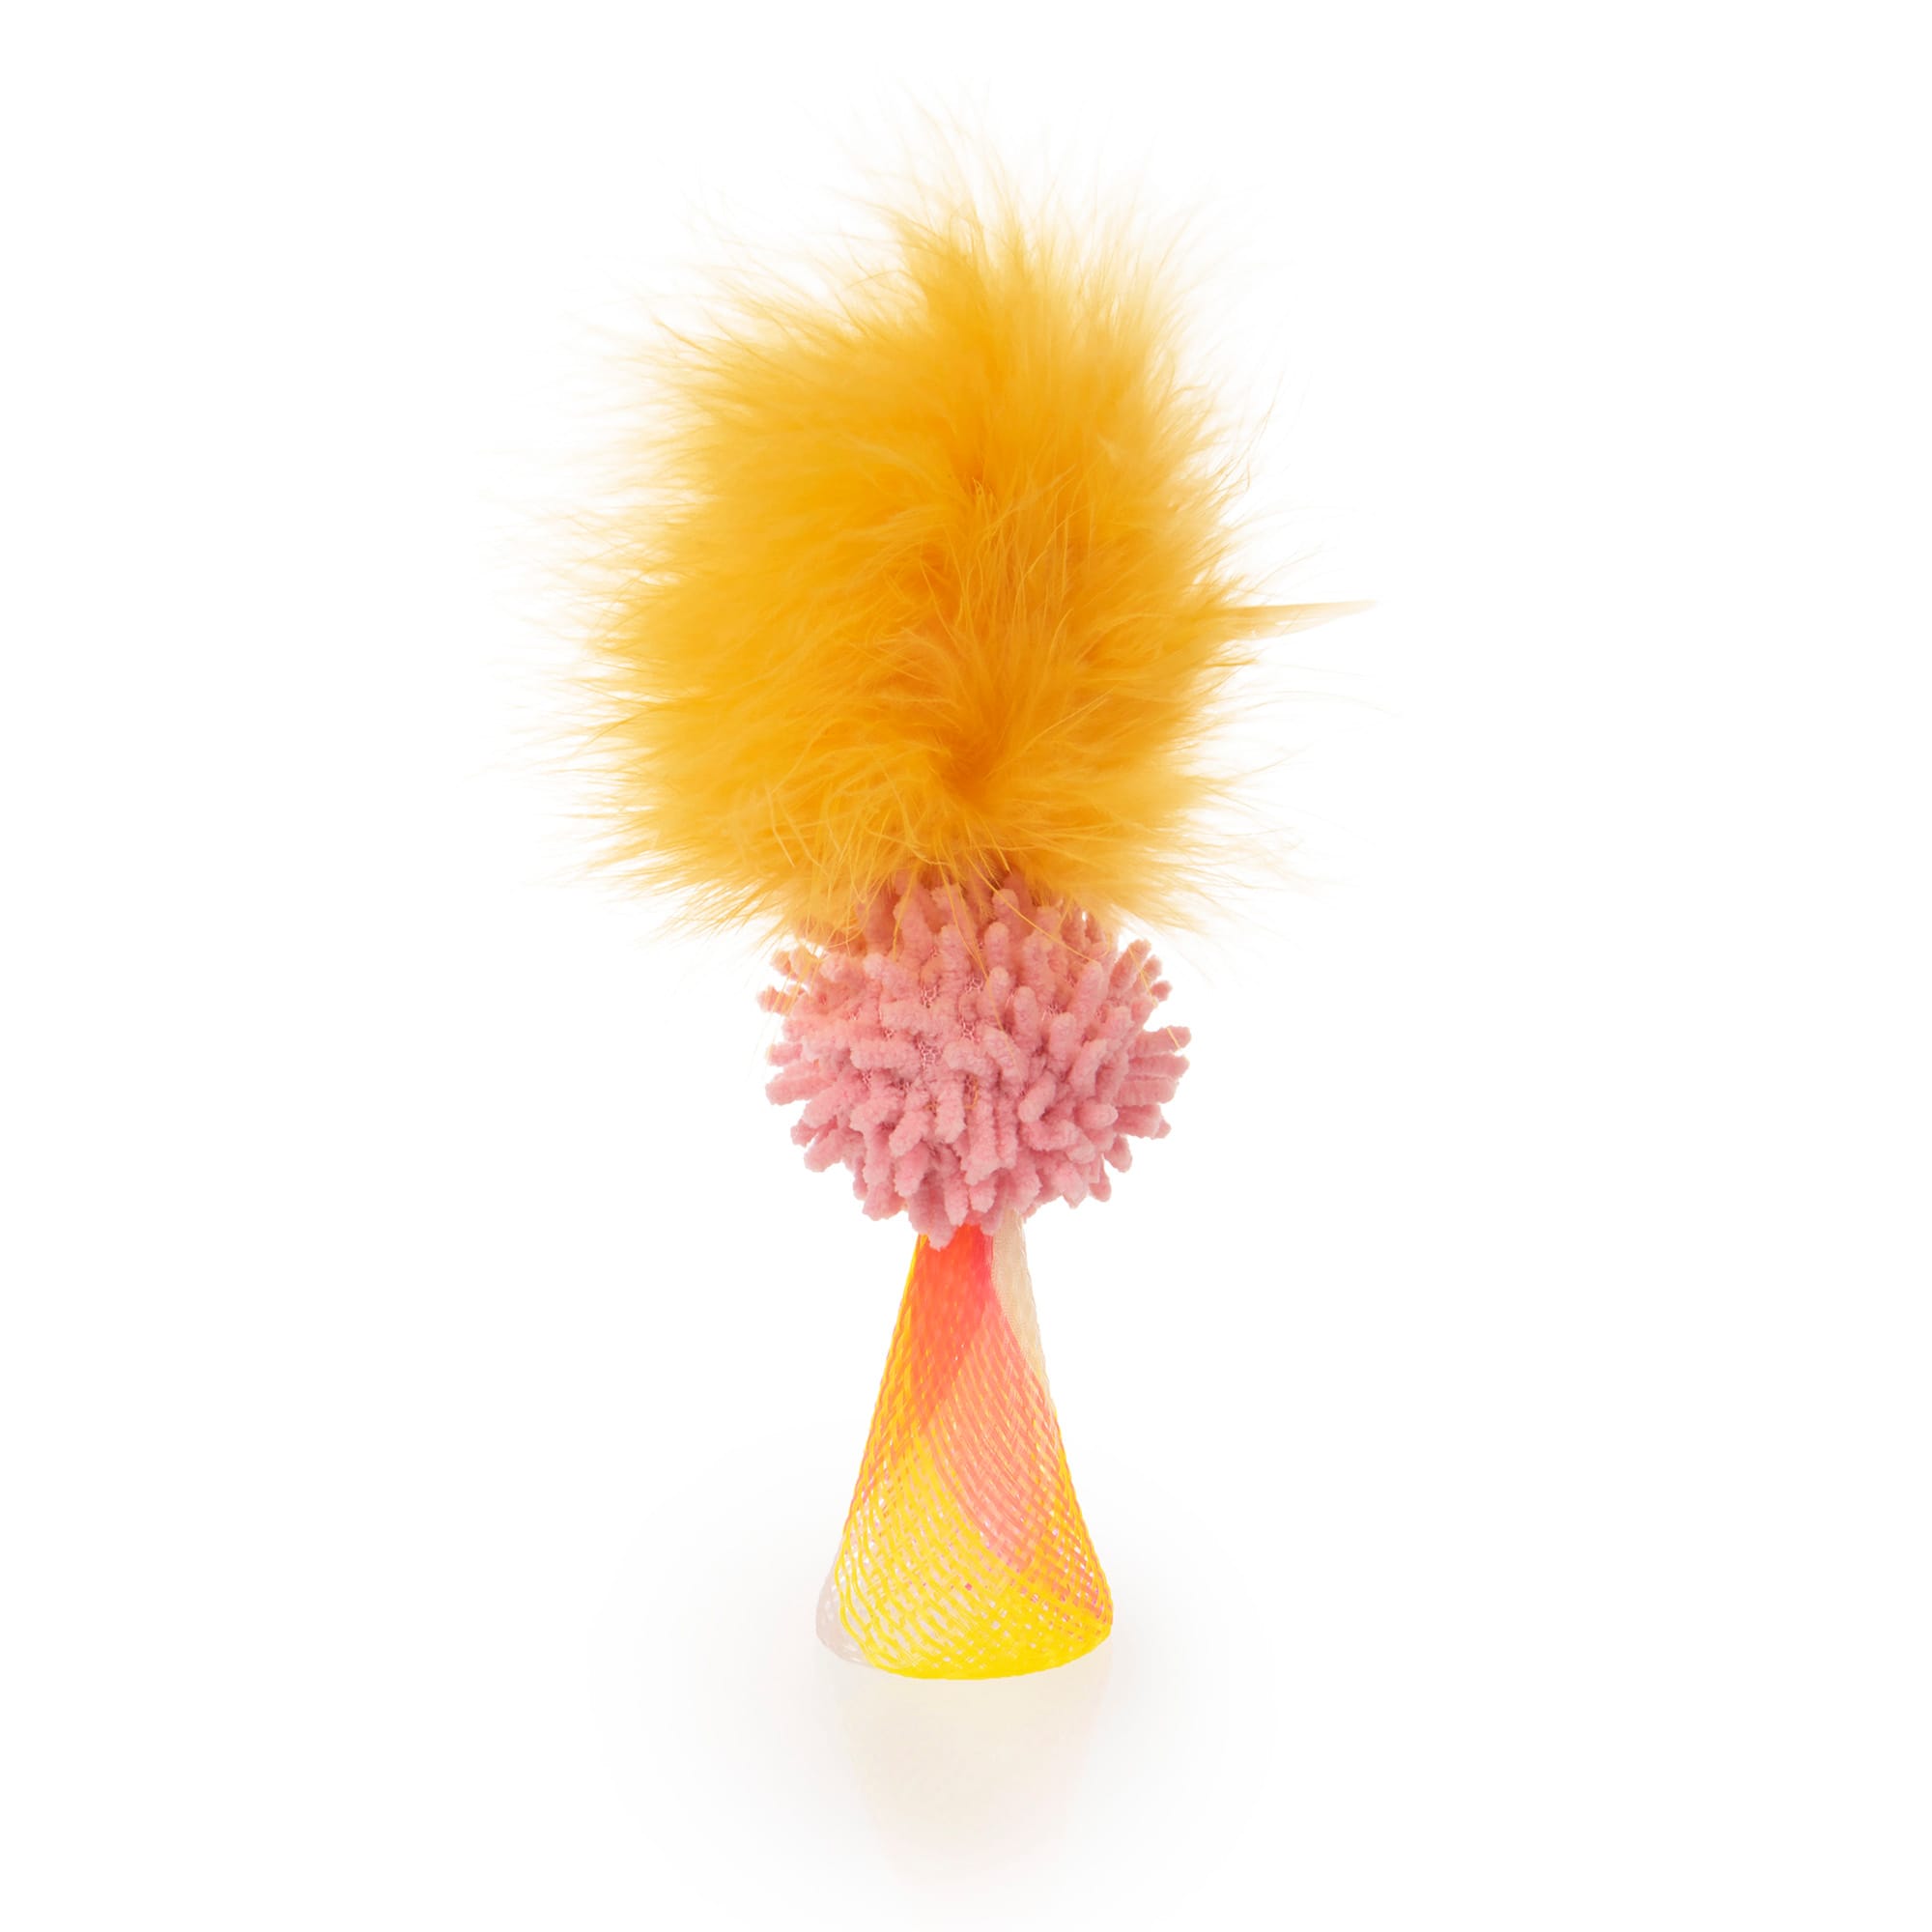 Kats'n Us® Real Rabbit Fur Pom Ball Cat Toy Colorful Flying Fuzz Balls